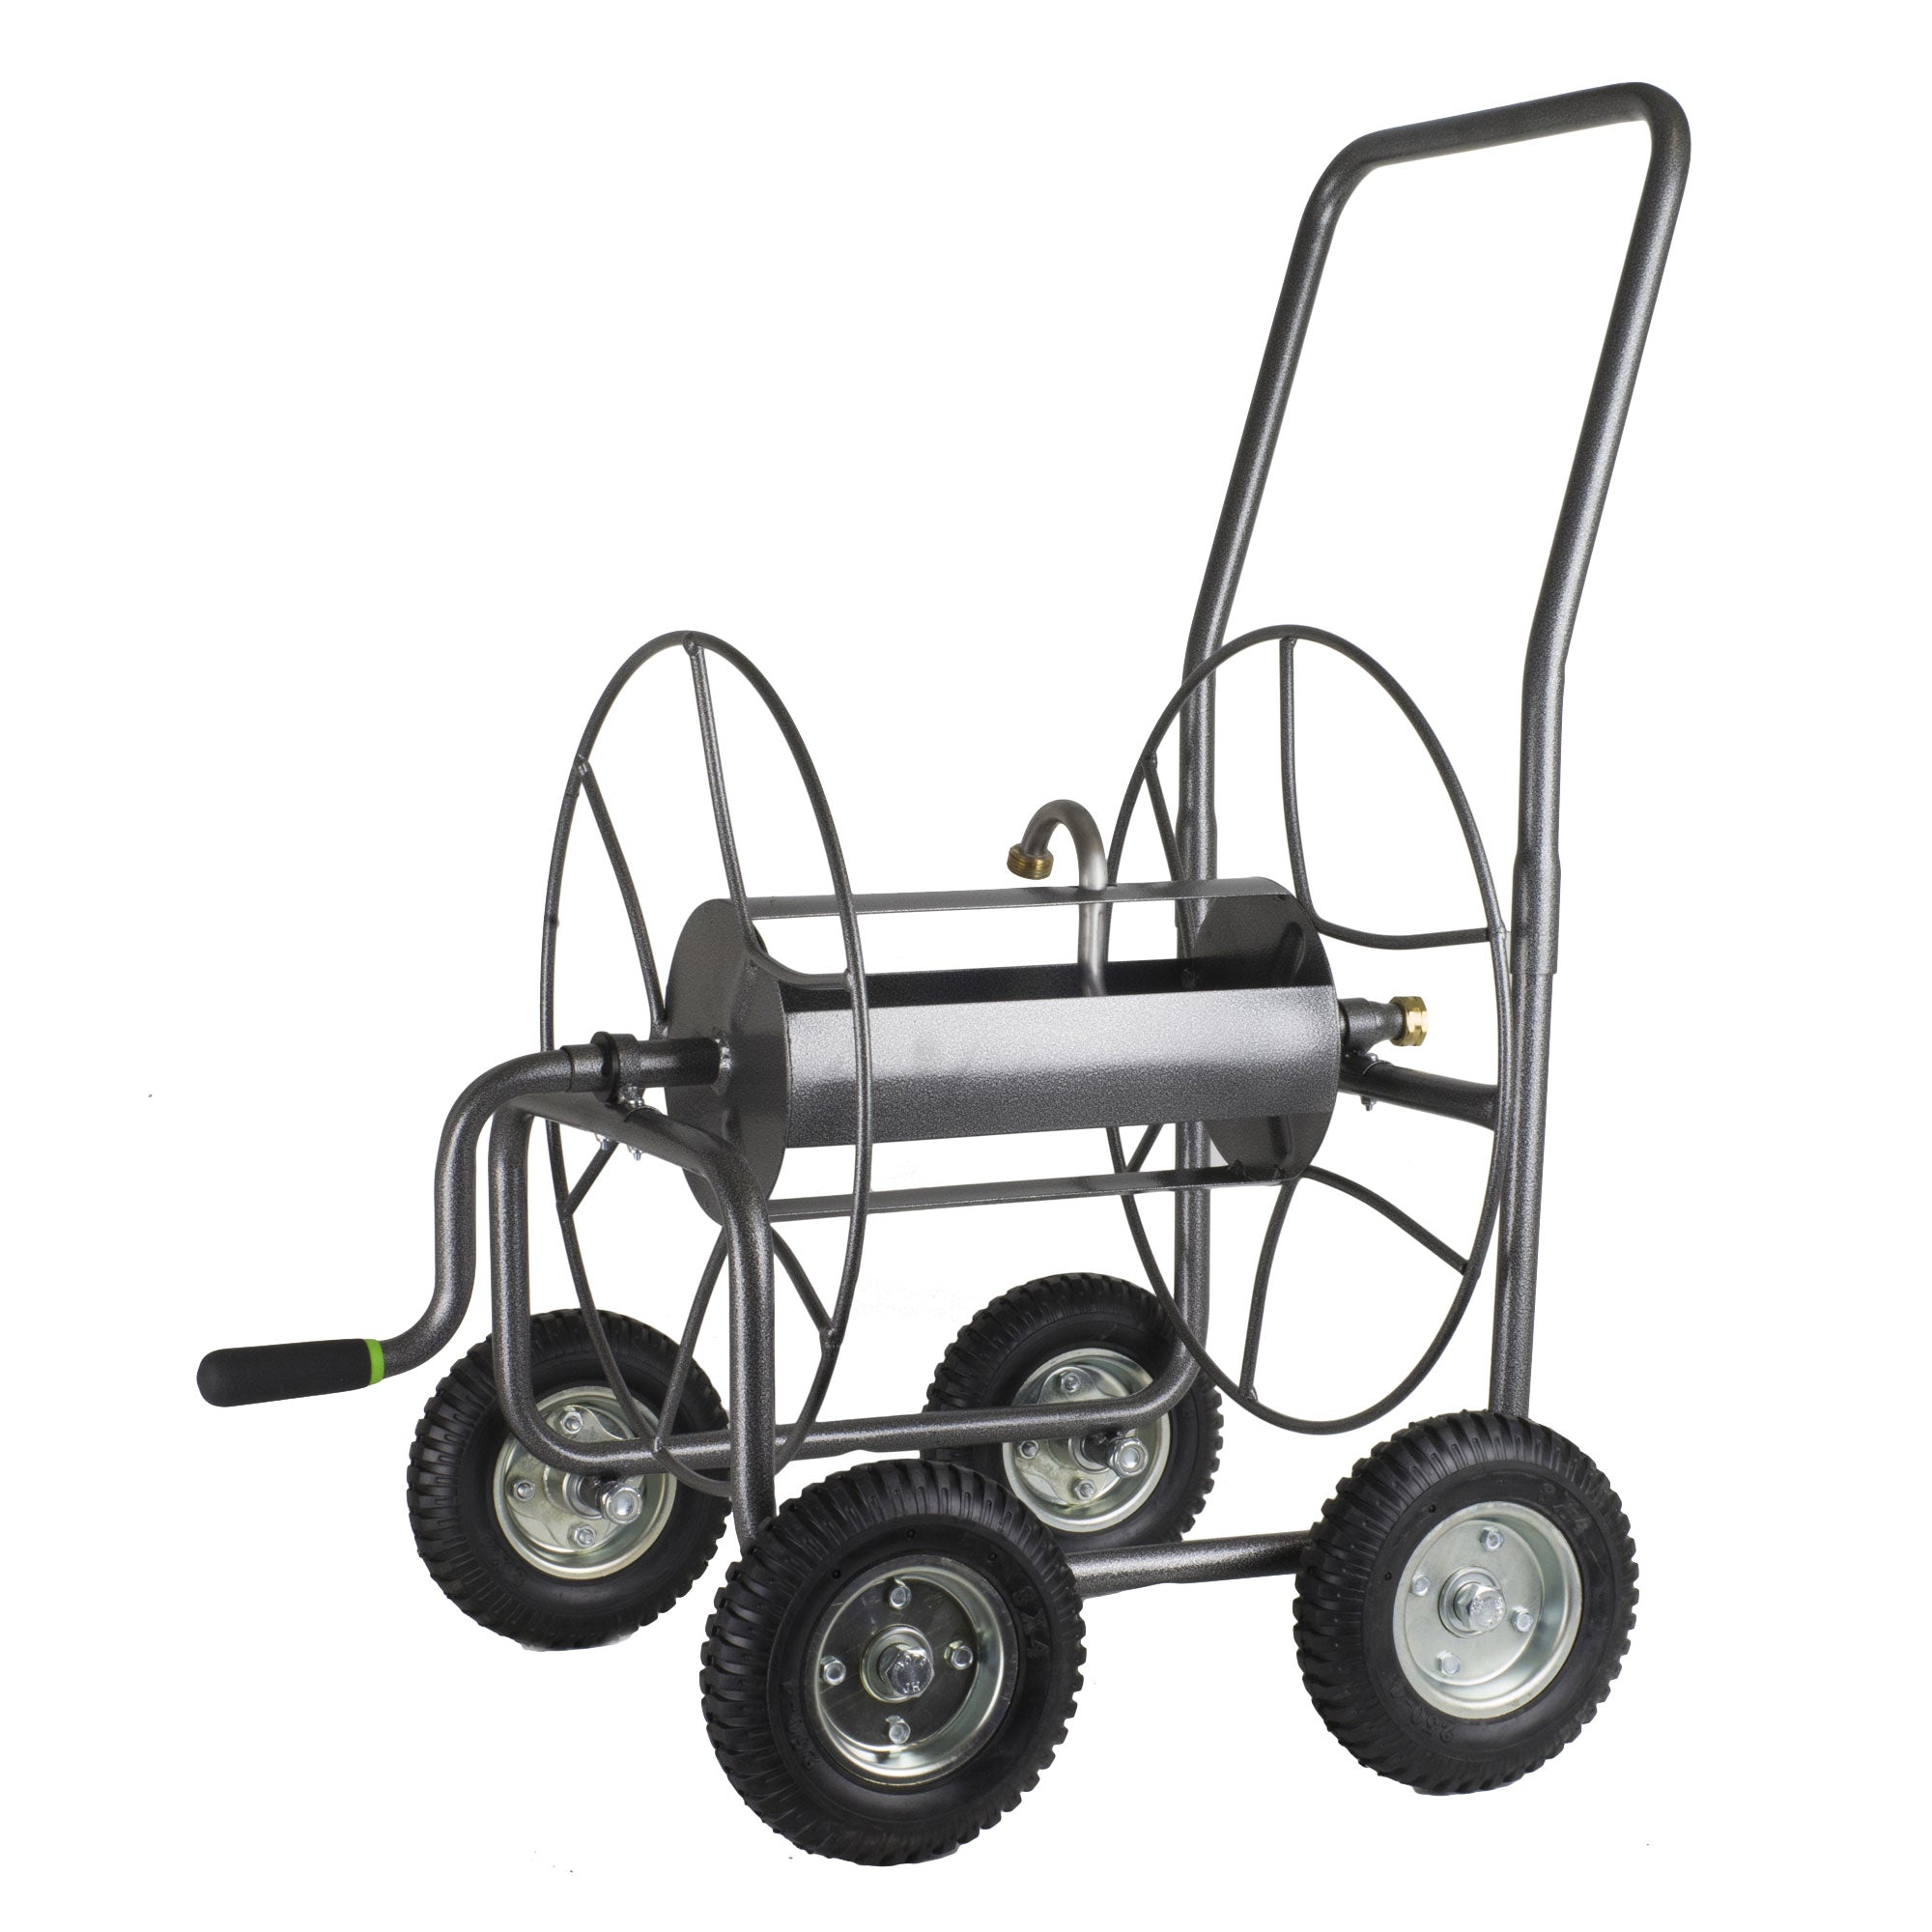 Dkeli Hose Reel Cart Garden Hose Carts with Wheels Heavy Duty Portable Water Hose Cart 4 Wheels Outdoor Yard Lawn Planting Truck with Storage Basket